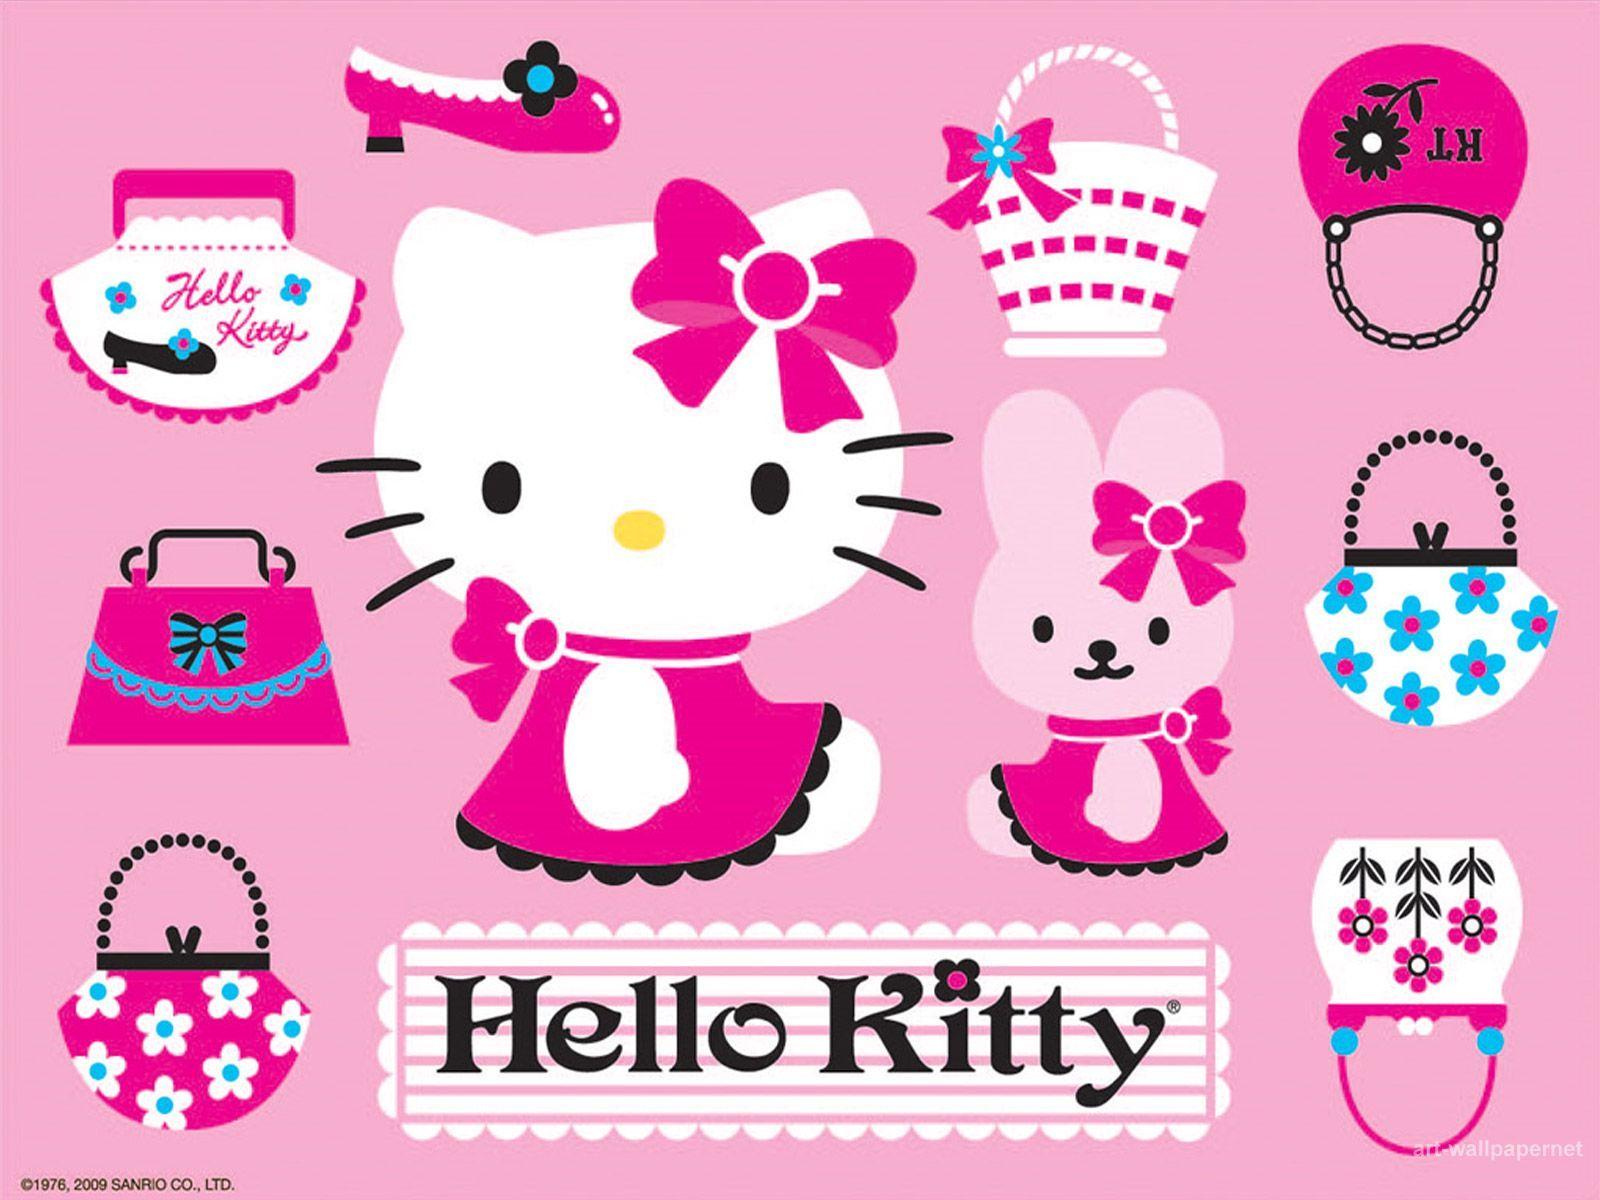 Download Hello Kitty Poster Art Free Wallpaper 1600x1200. Full HD